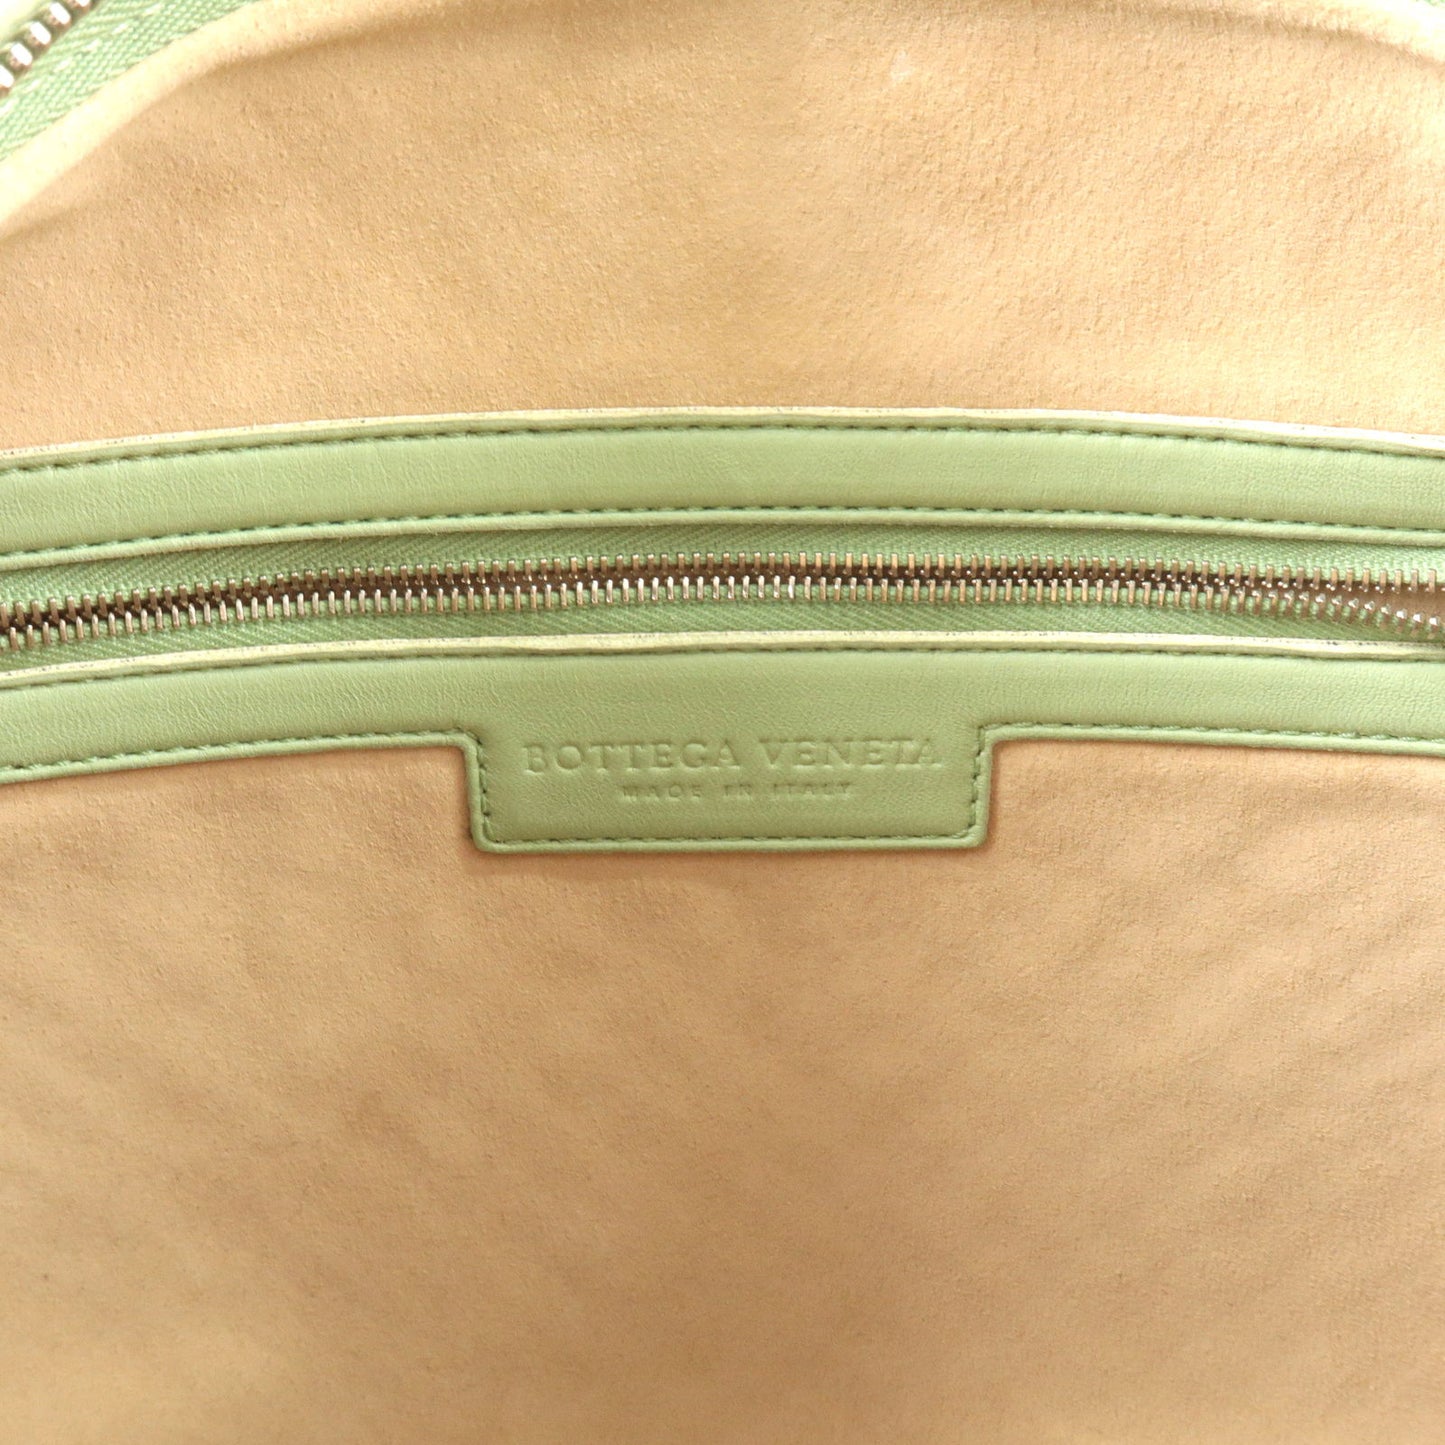 BOTTEGA VENETA Intrecciato Leather Shoulder Bag Light Green 115653